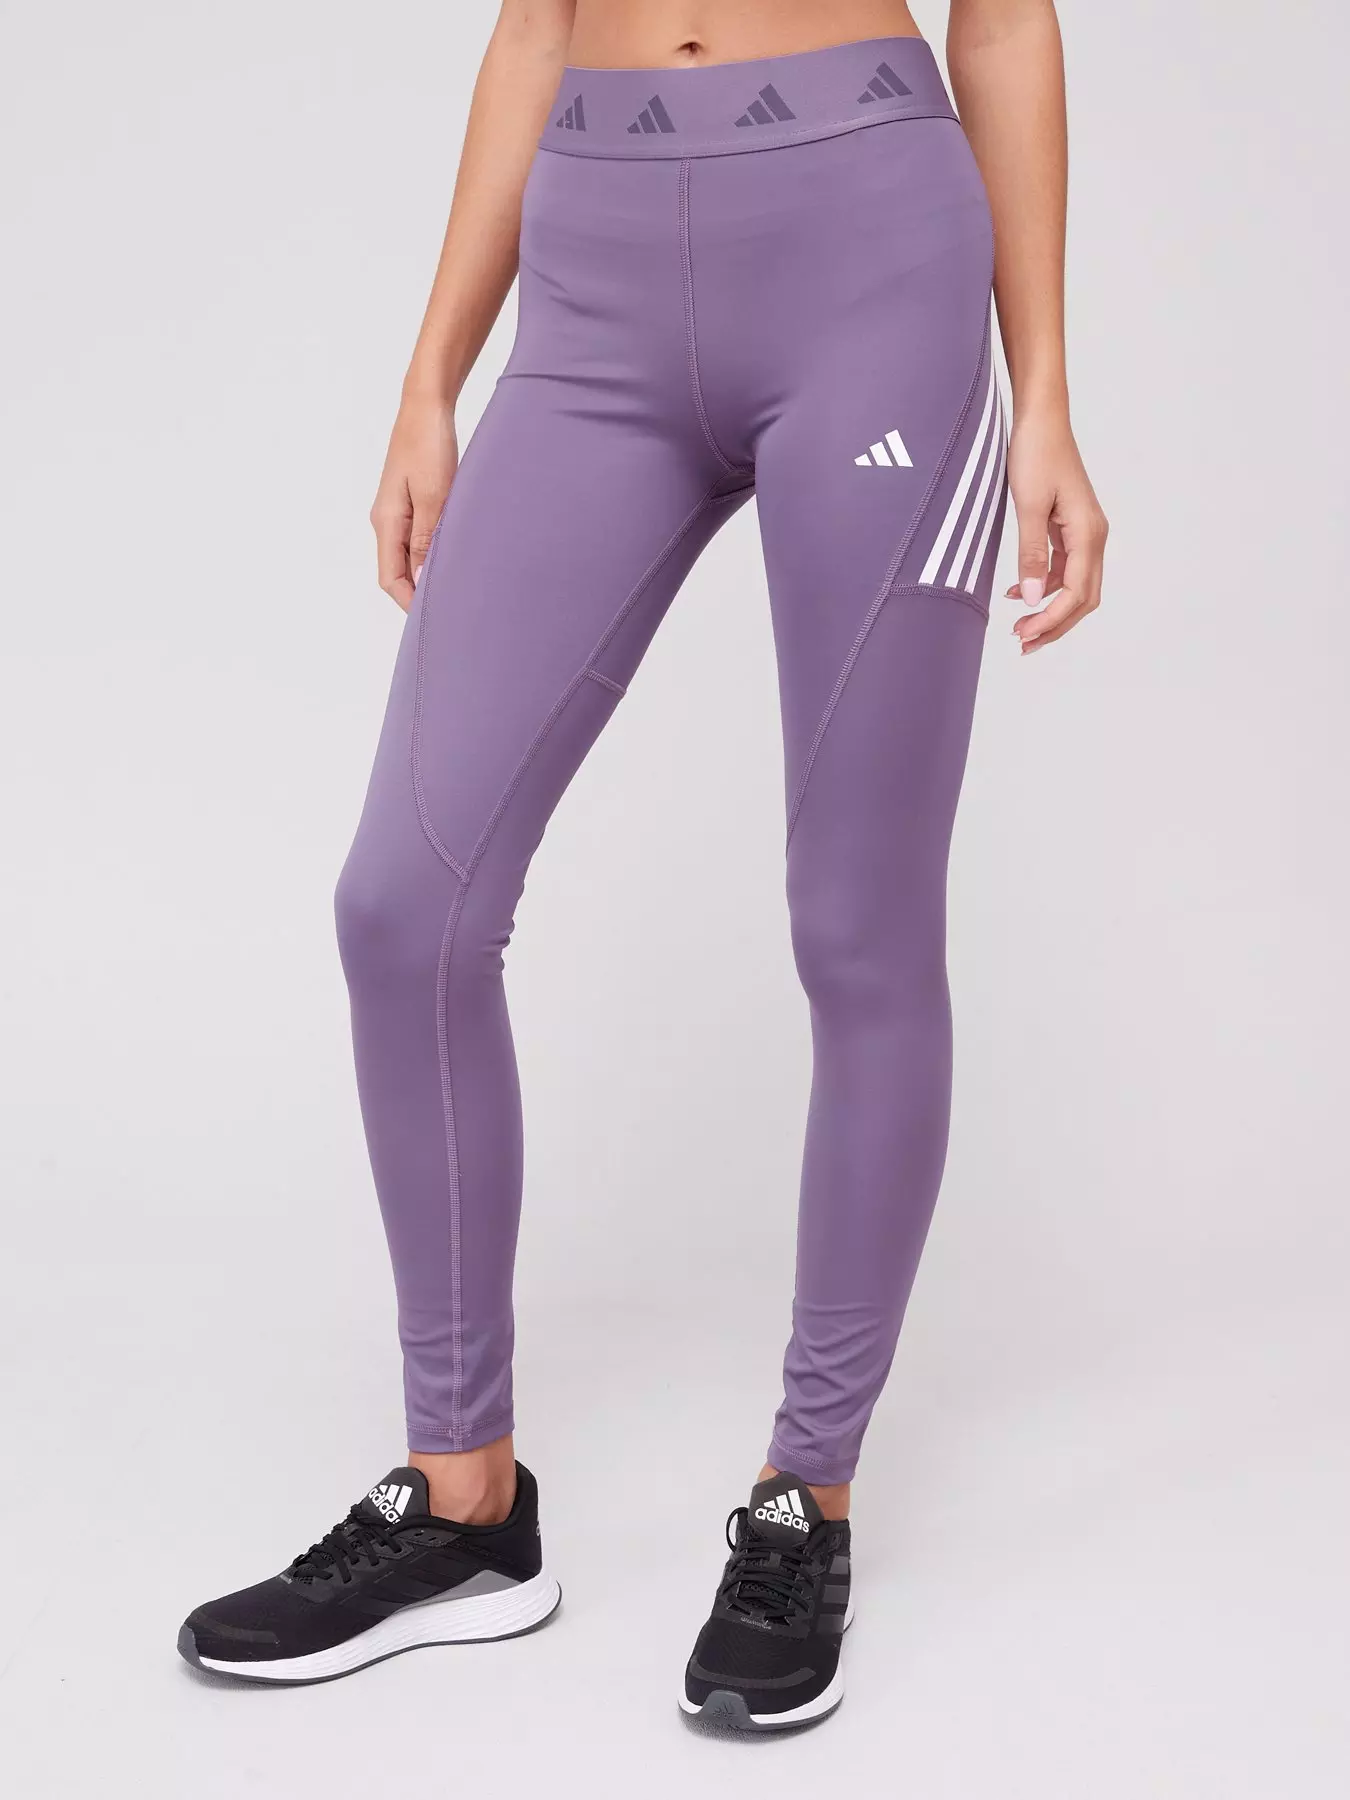 | & leisure Sports Womens Tights Adidas leggings sports | & | clothing